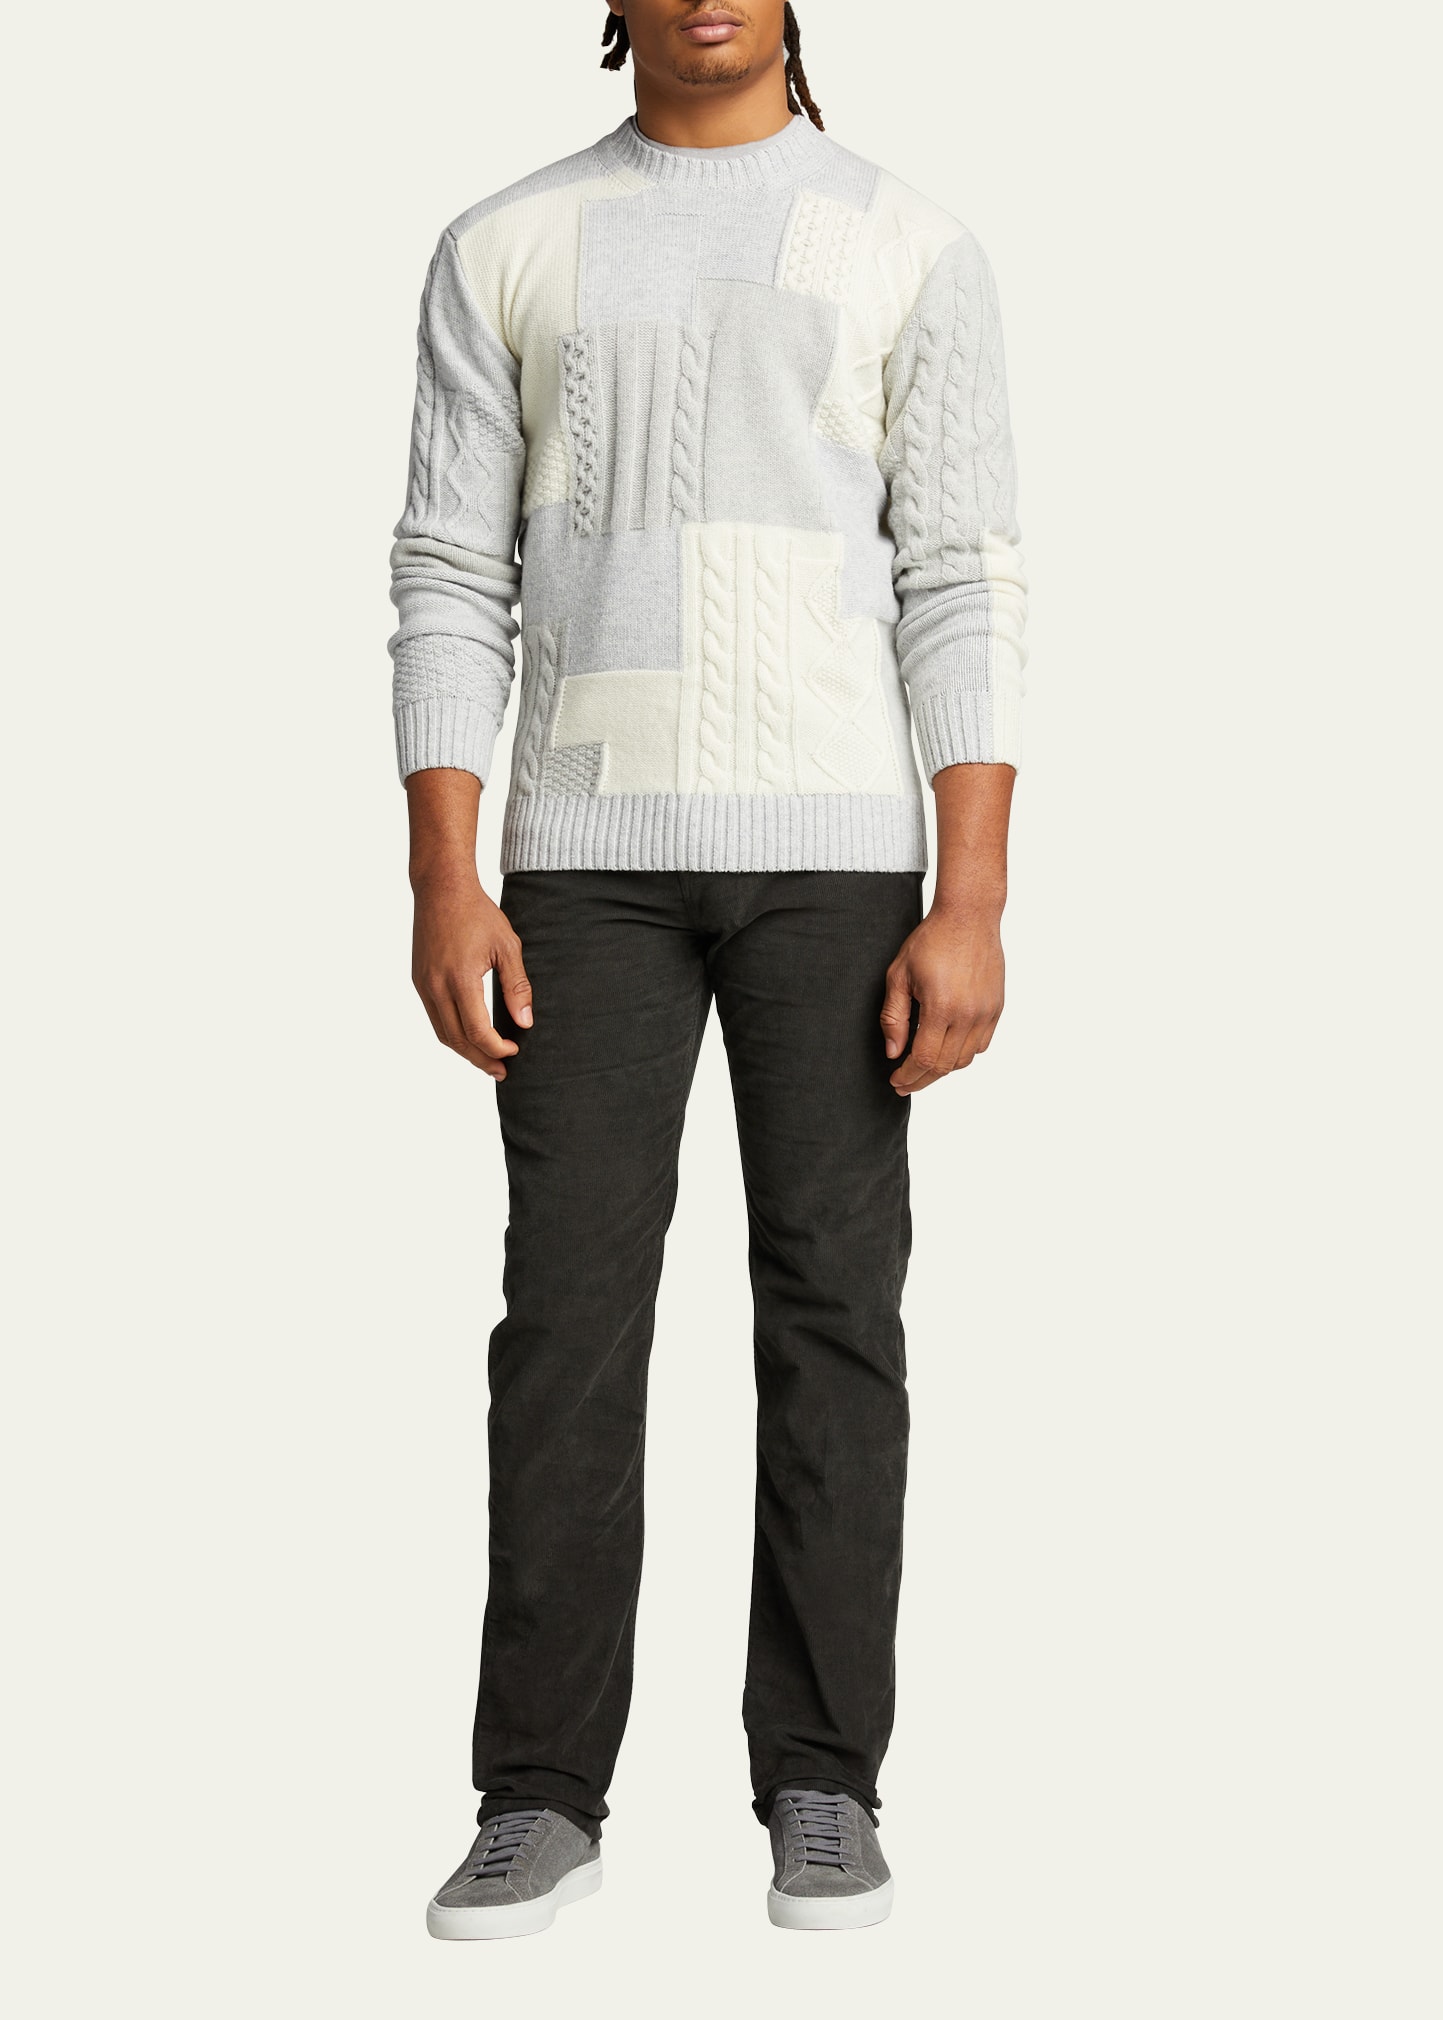 B. x Country of Origin Men's Wool Patchwork Sweater, Light Gray/Ivory/Gray